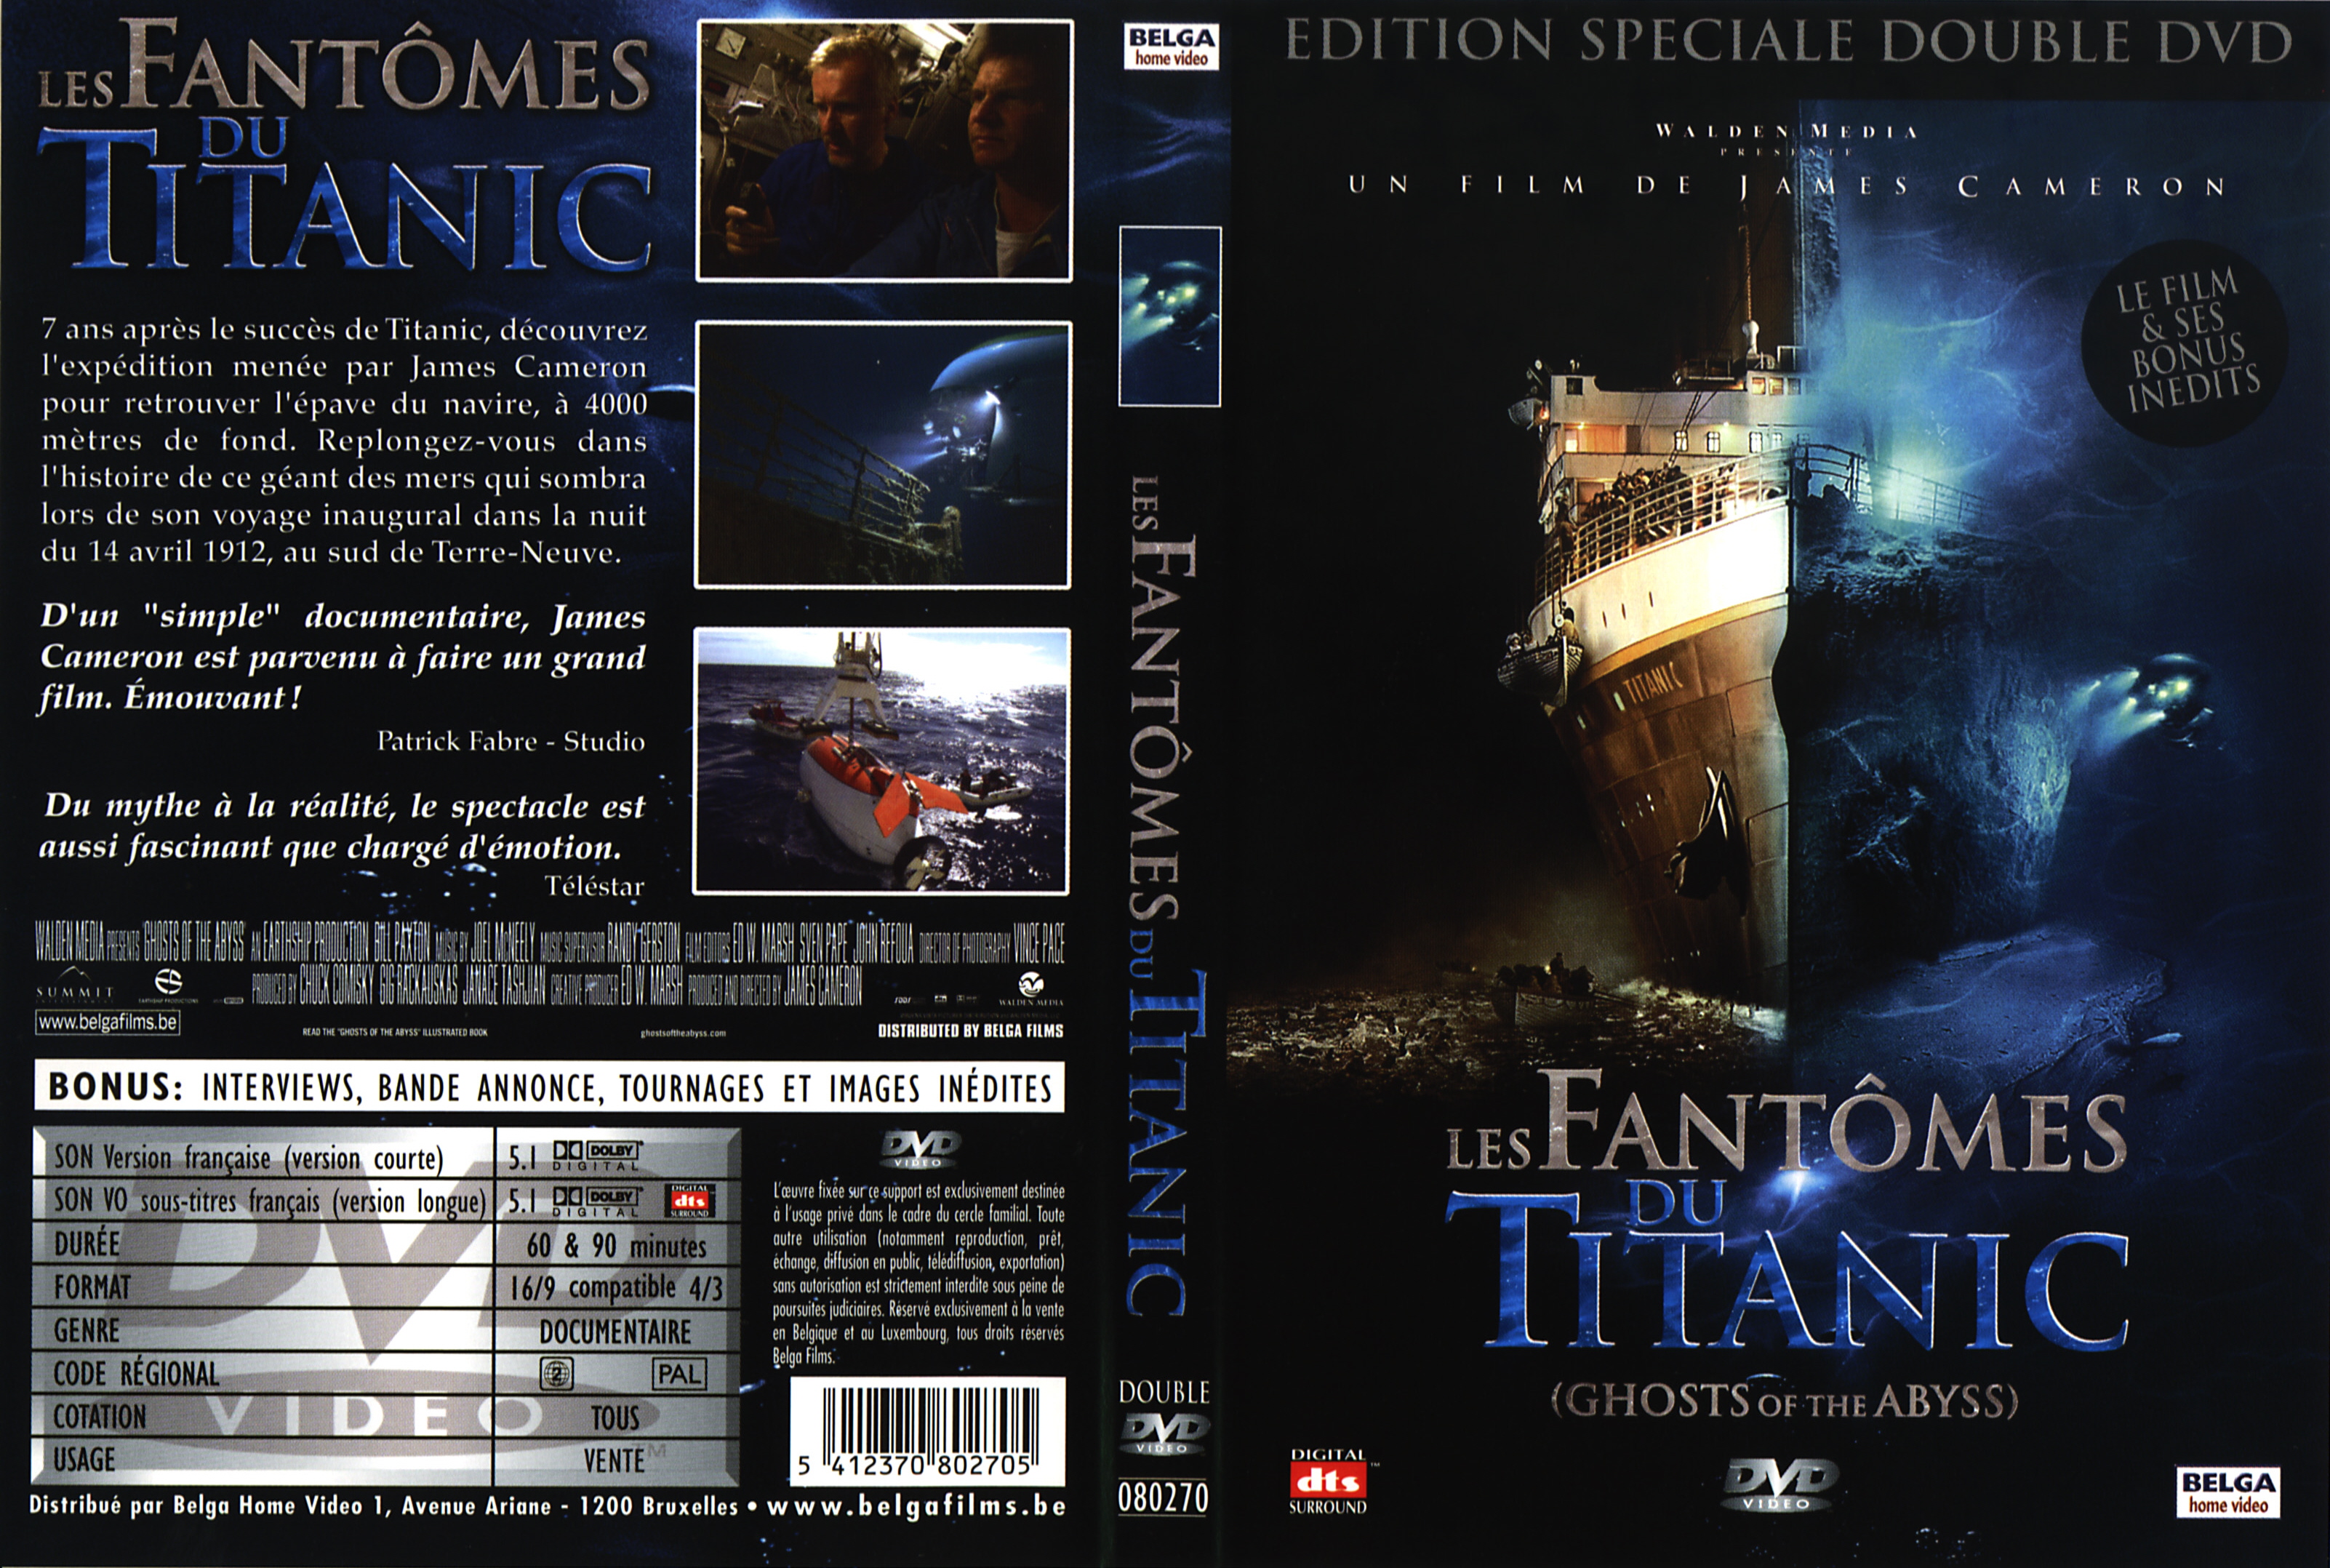 Jaquette DVD Les fantomes du titanic v2